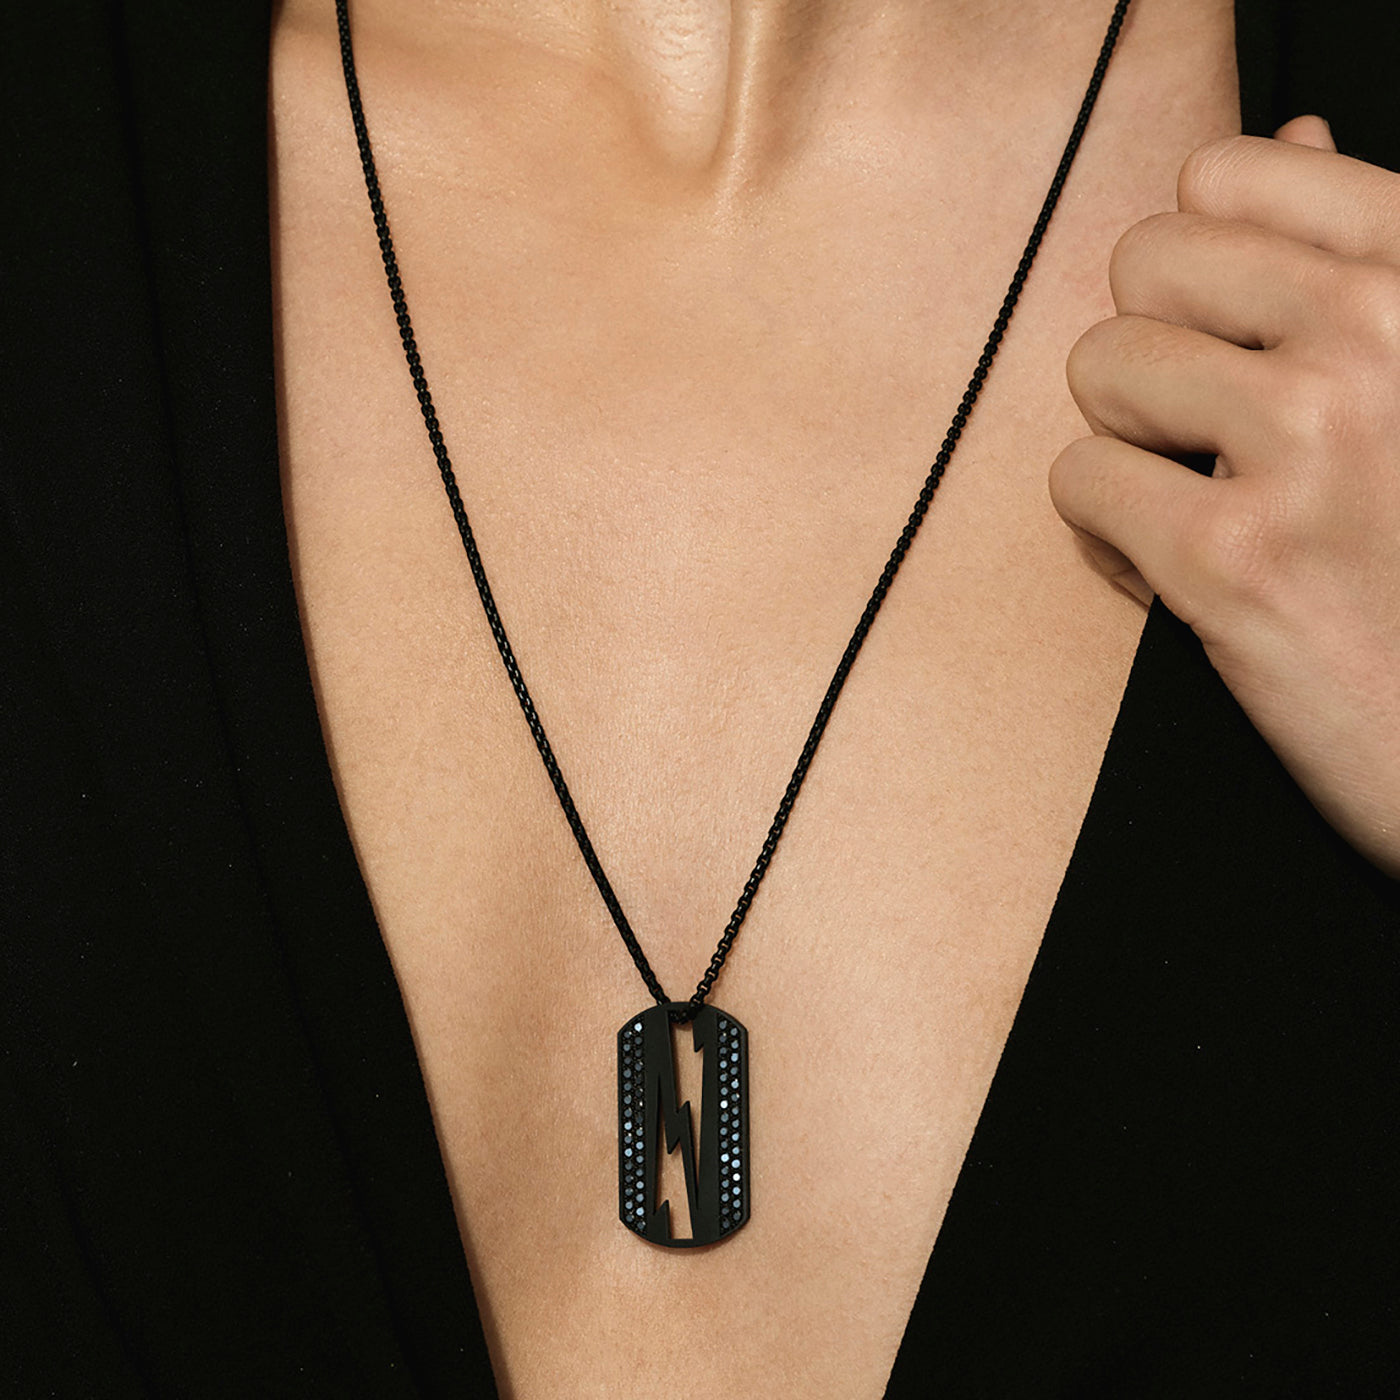 Lovetag black diamond necklace